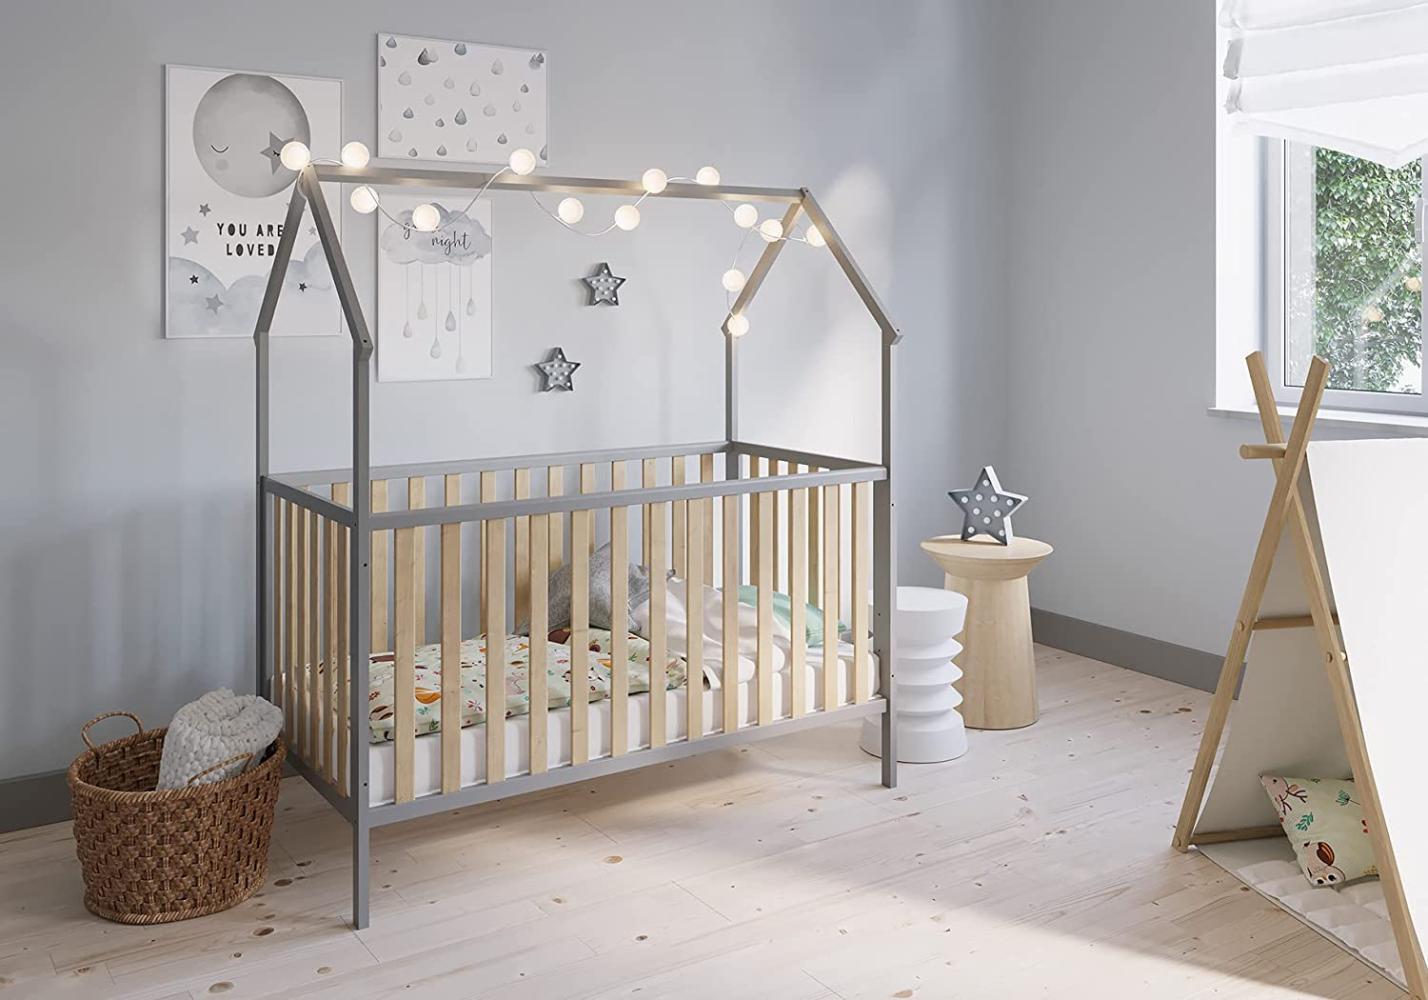 FabiMax 'Schlafmütze' Kinderbett, 70 x 140 cm, grau/natur, Kiefer massiv, 3-fach höhenverstellbar, umbaubar Bild 1